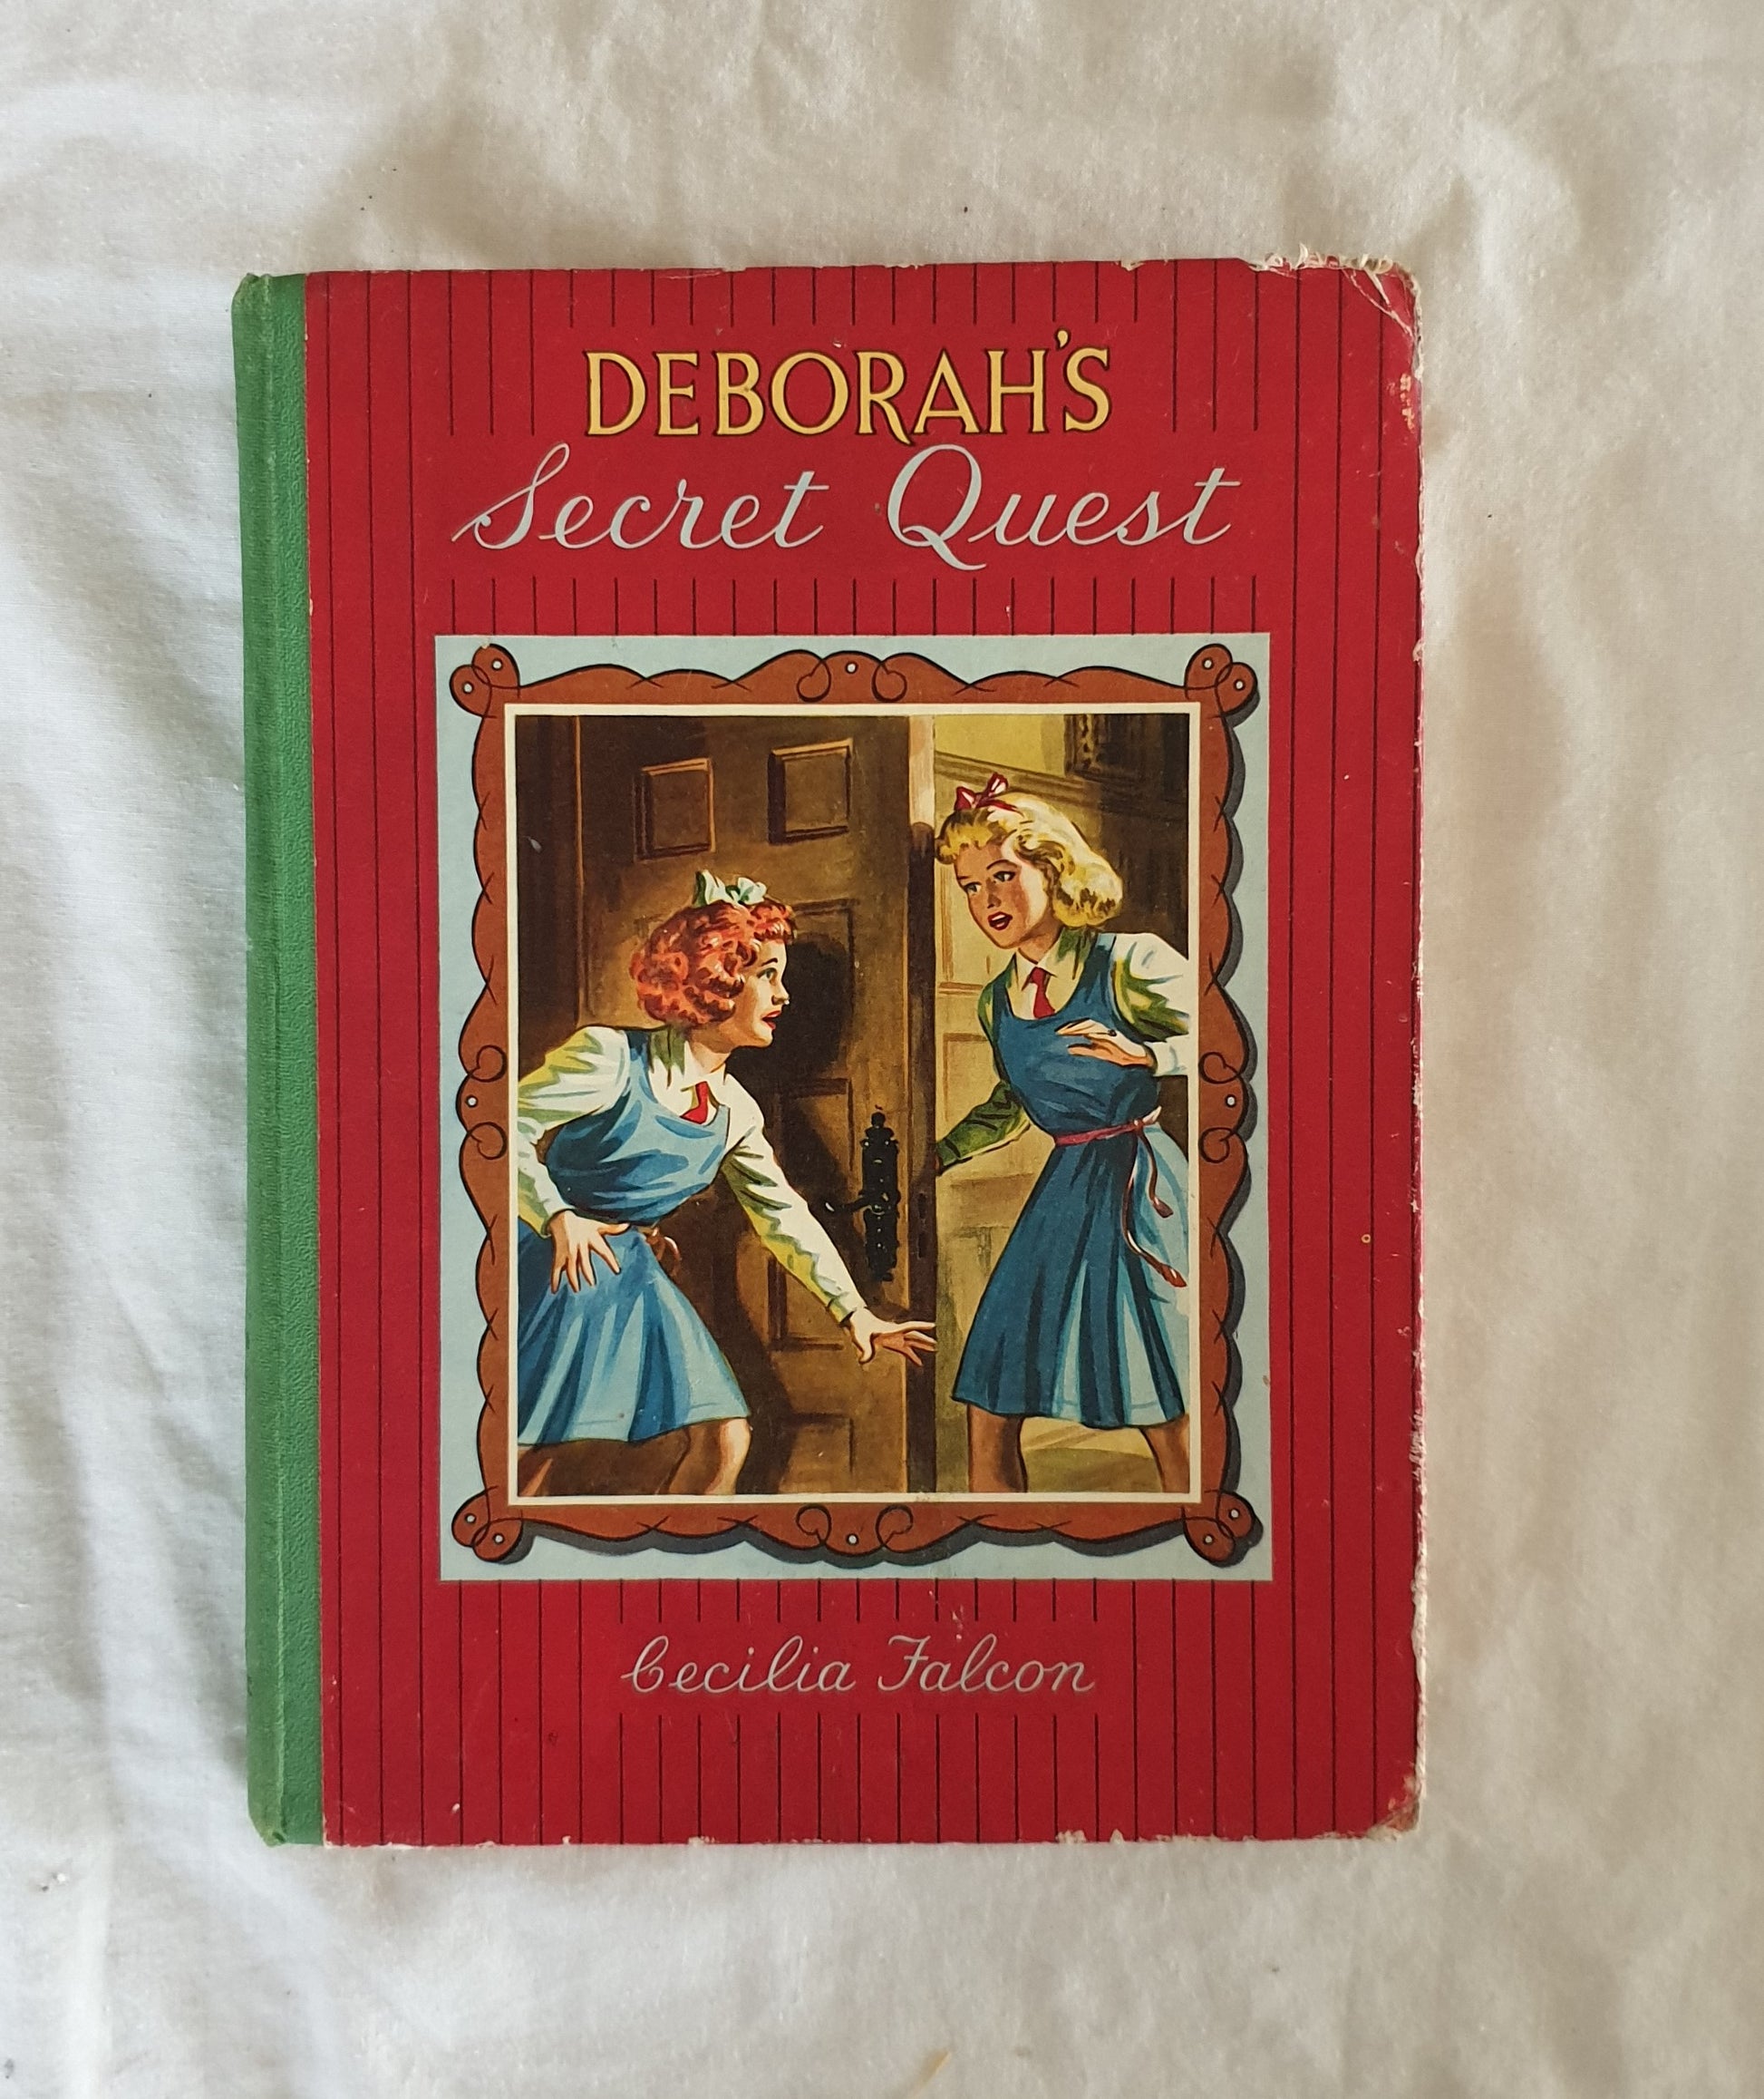 Deborah's Secret Quest by Cecilia Falcon